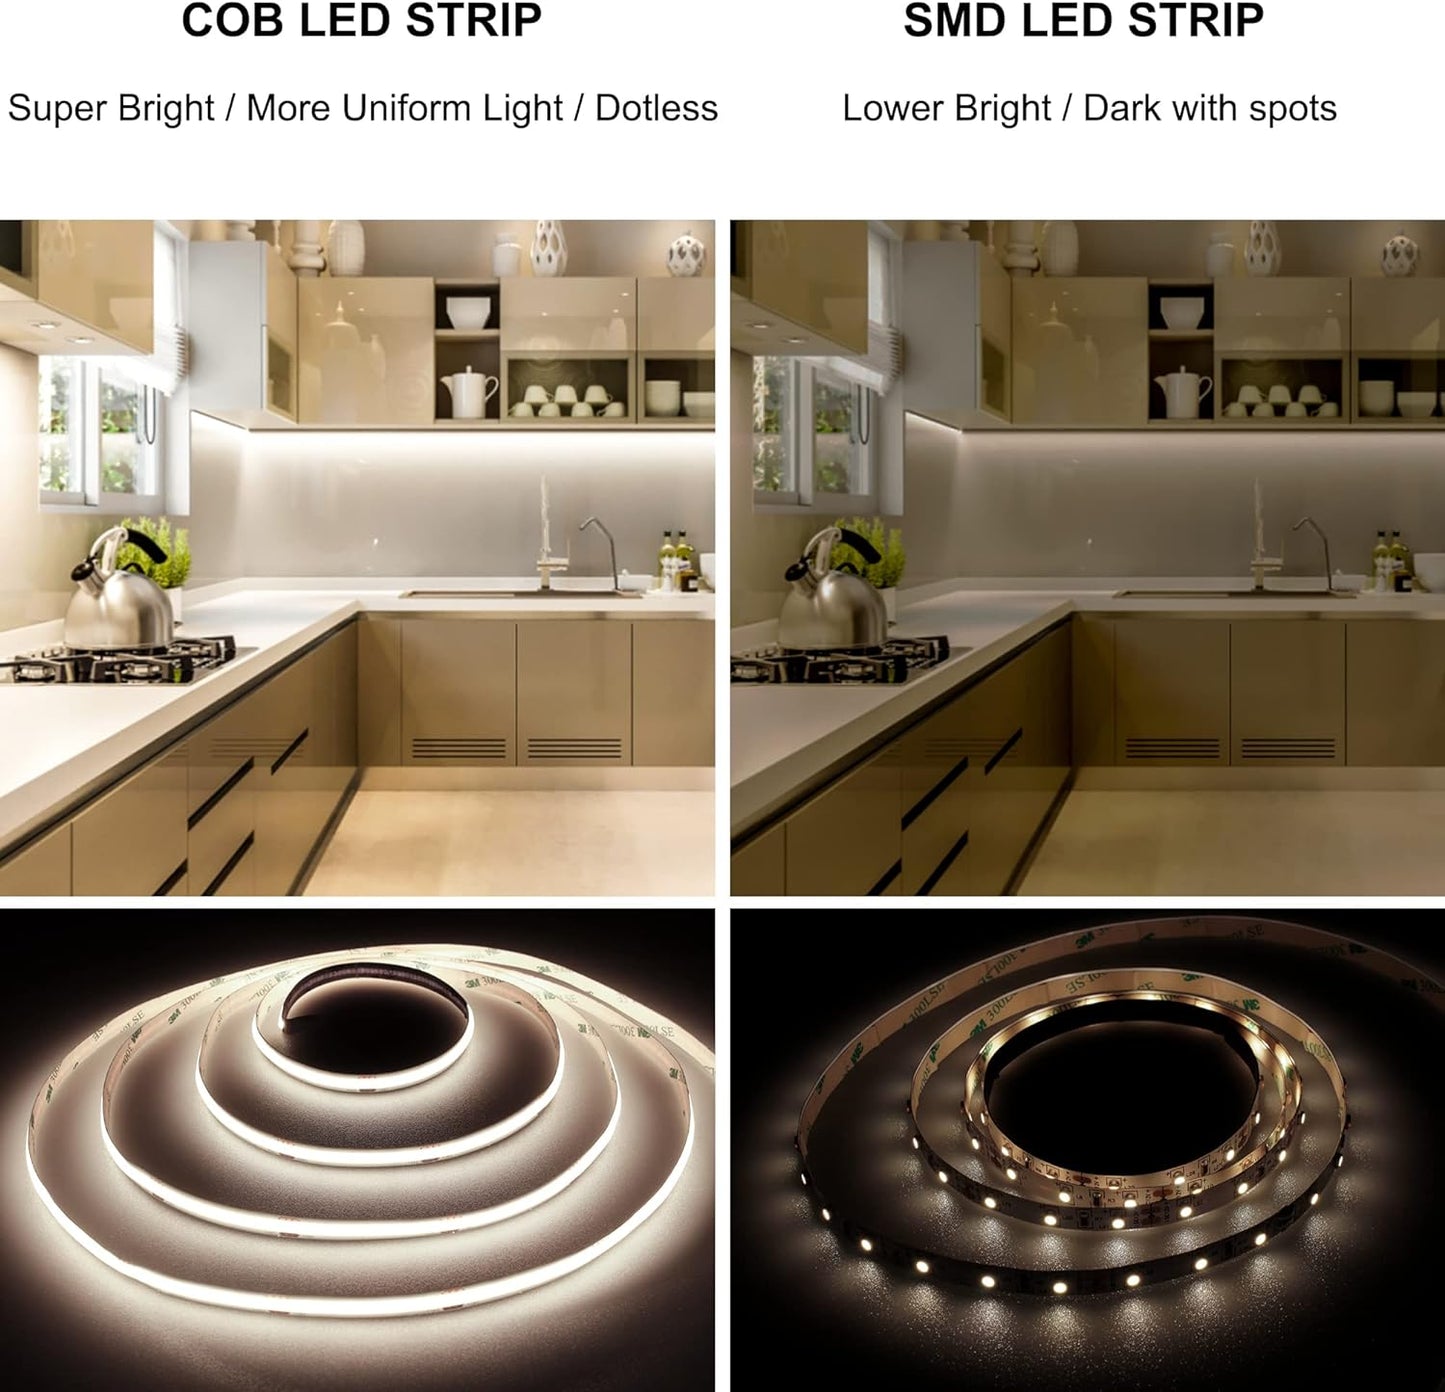 COB LED Strip 10M, Continus Dotless LED Strip Lights with 8mm Width, DC24V, CRI>90 for Bedroom Decoration